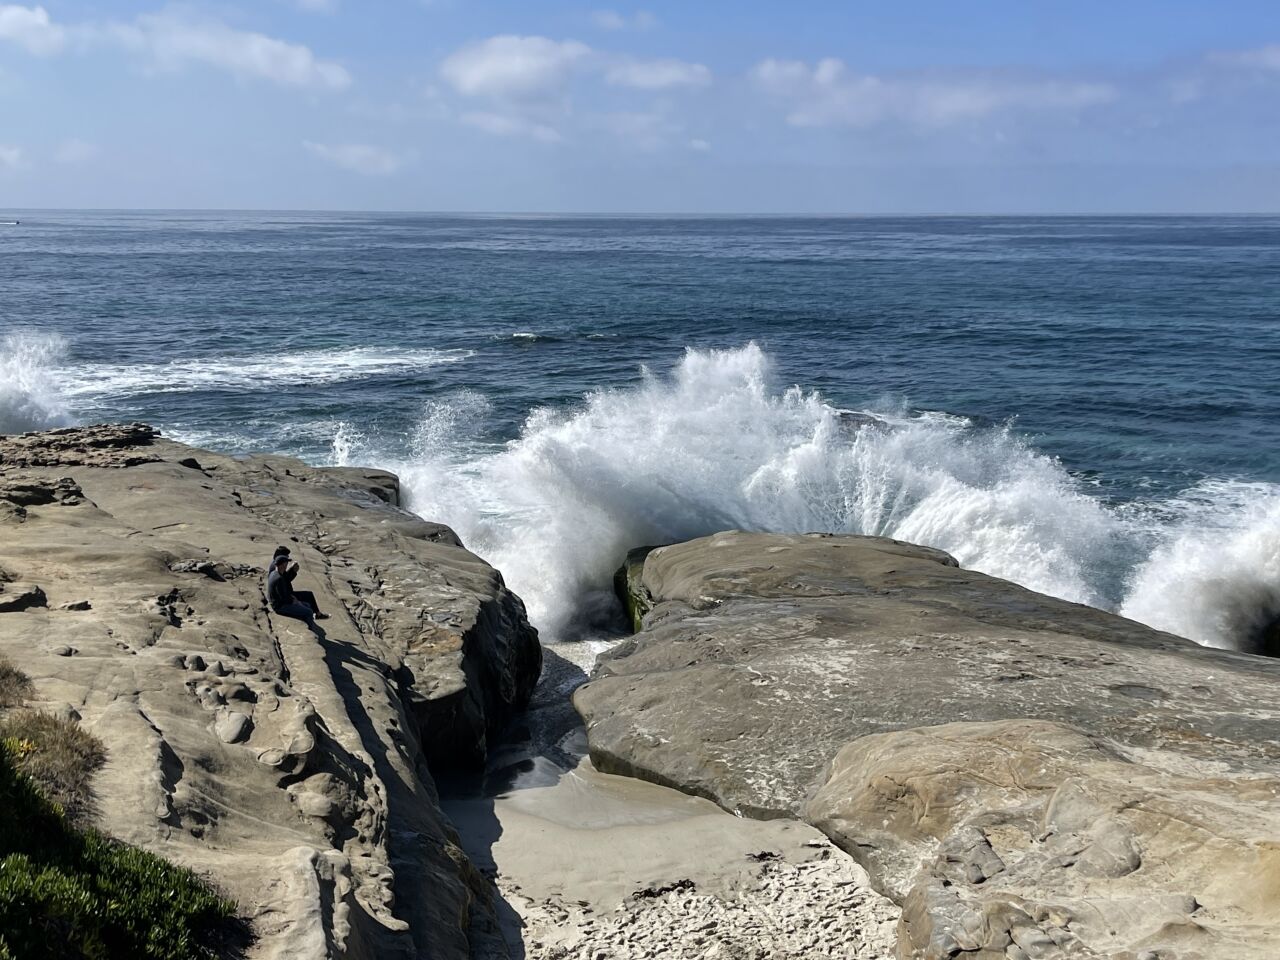 Waves pound the rocks at Windansea.